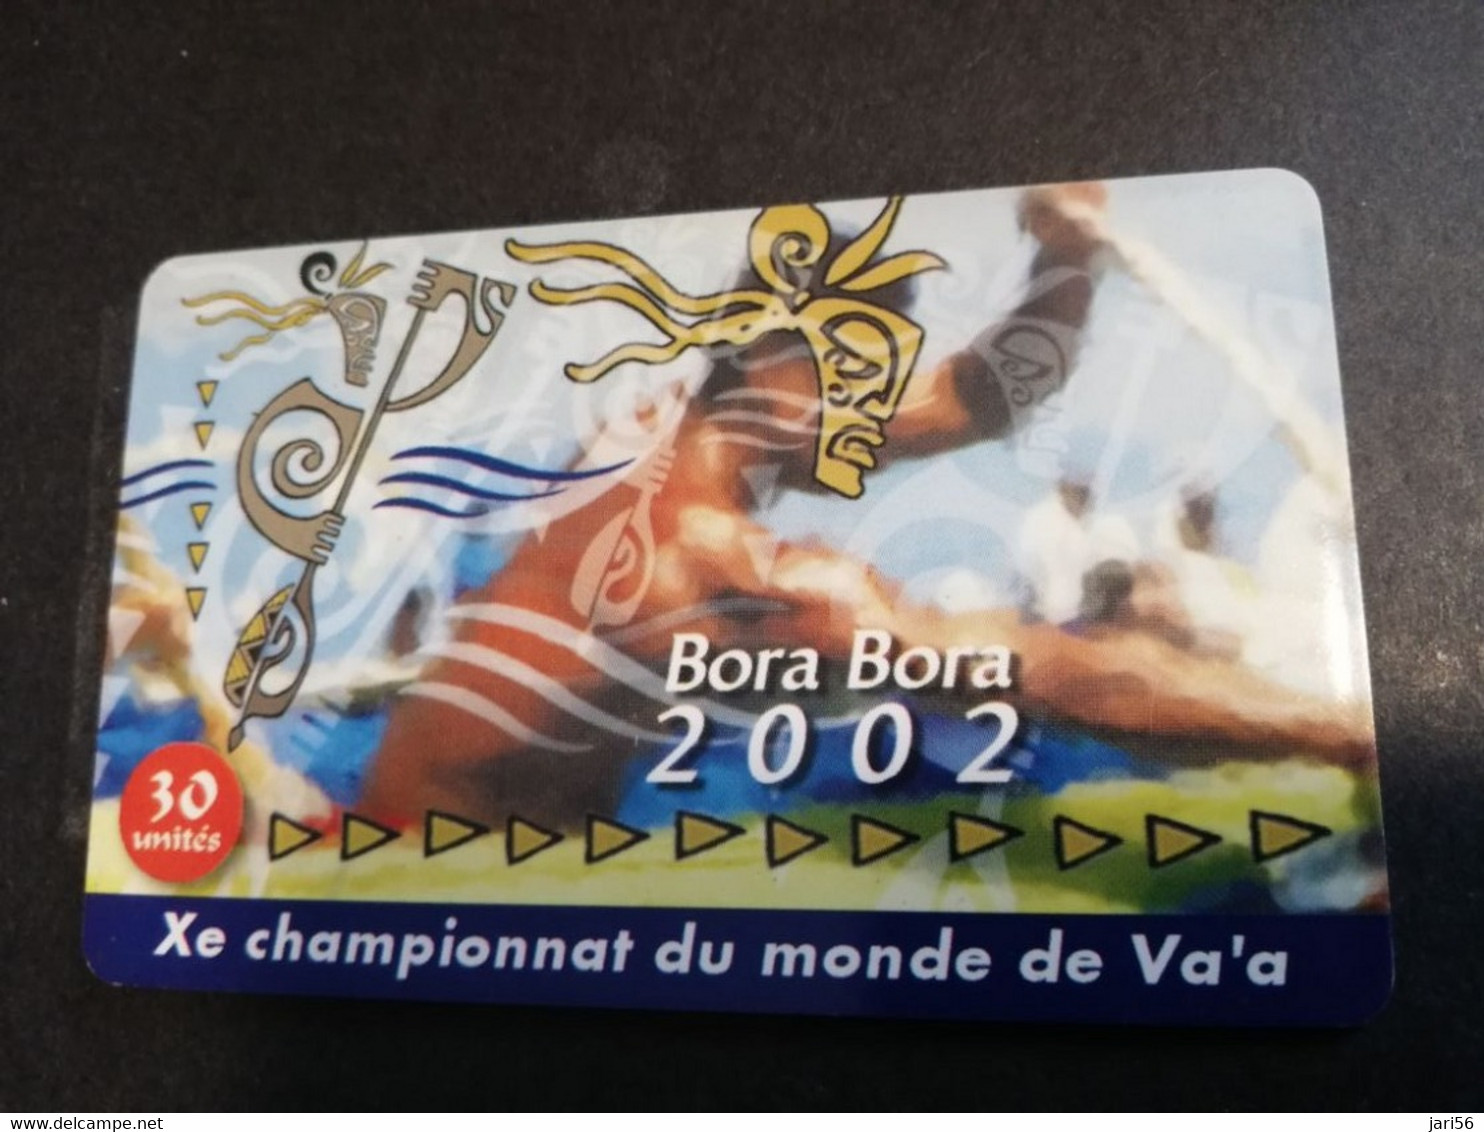 POLINESIA FRANCAISE  CHIPCARD  30   BORA BORA 2002 CHAMPIONNAT DU MONDE DE VAA               **4936** - Polynésie Française